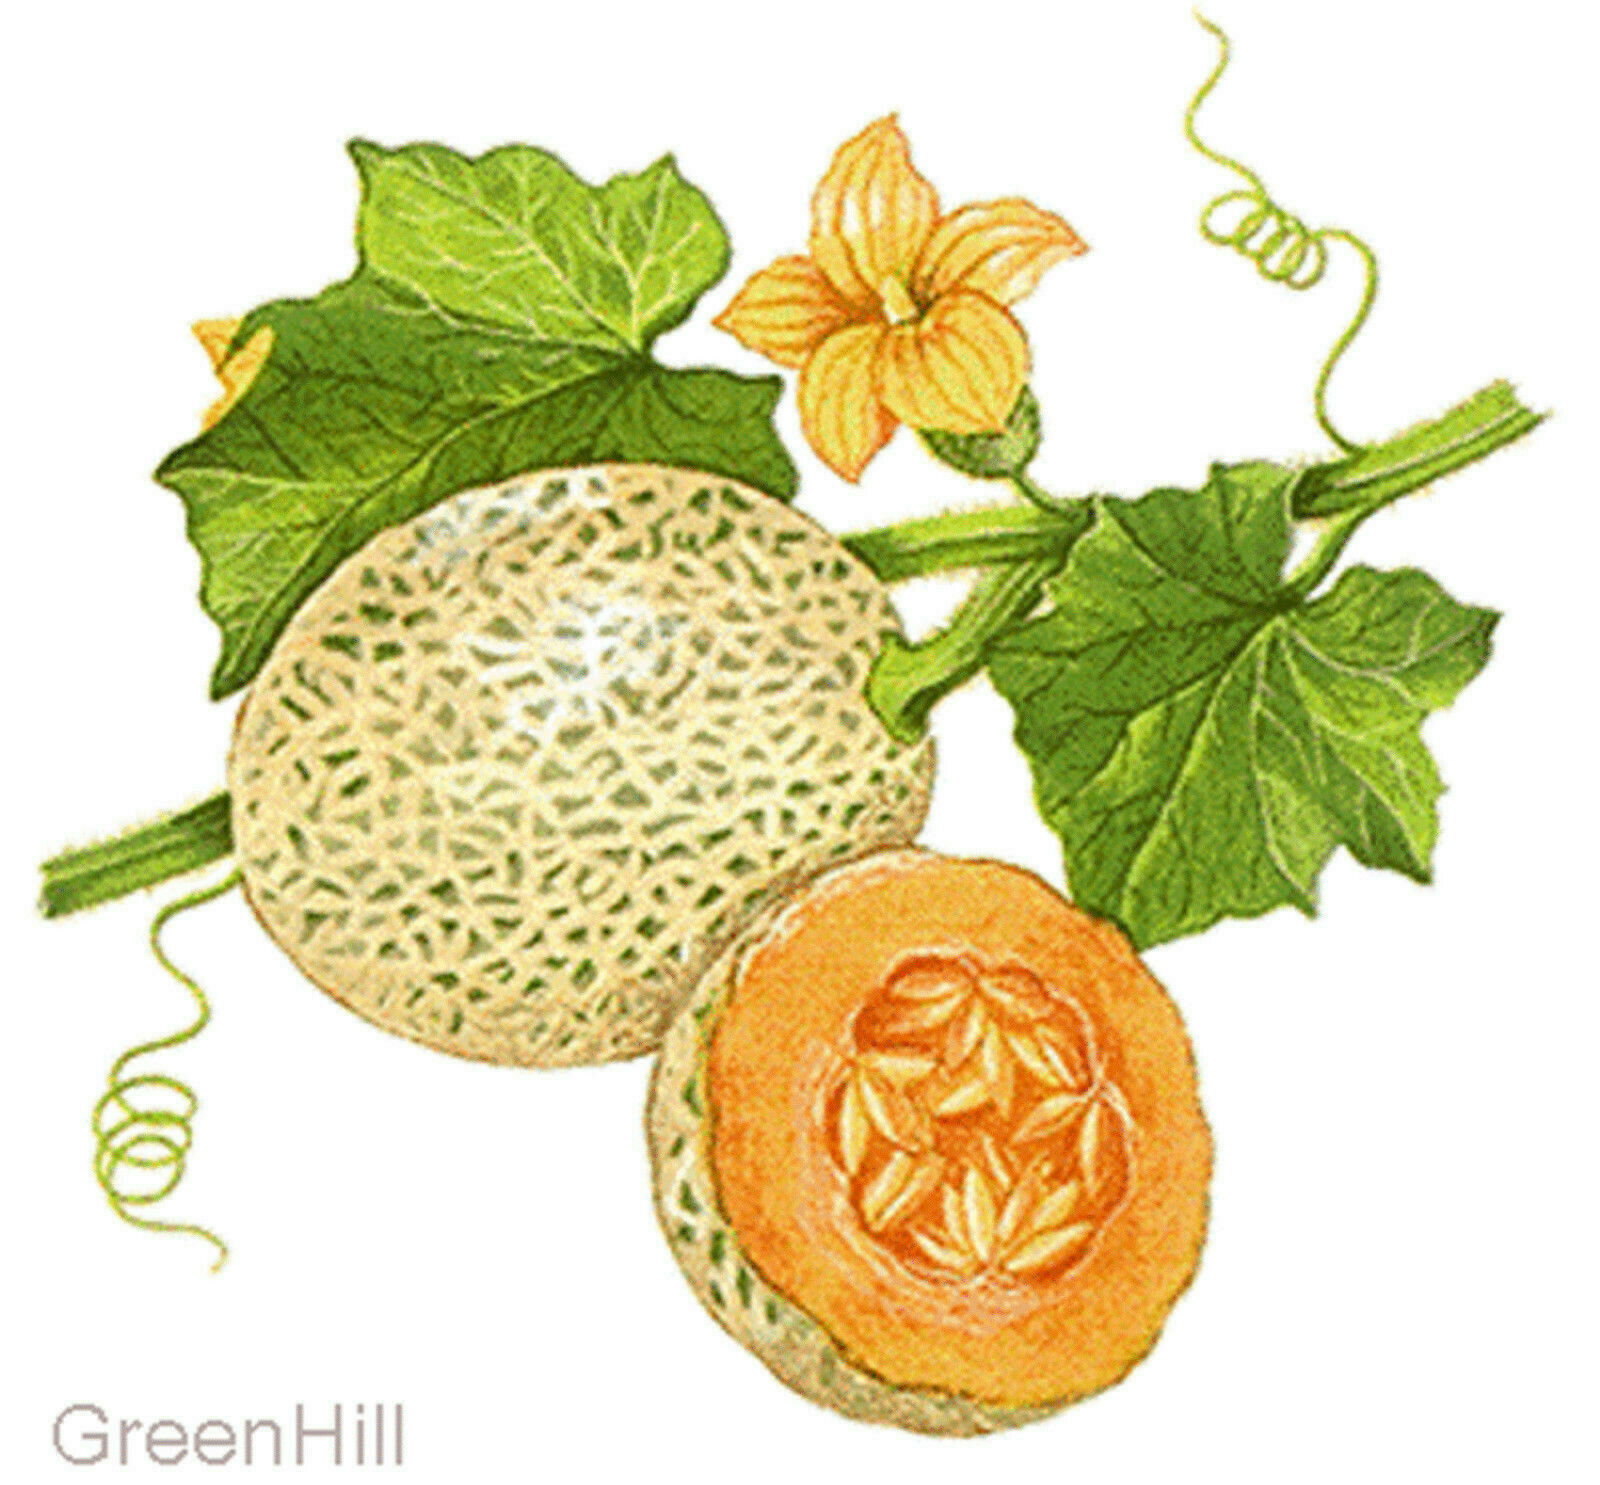 Cantaloupe Melon, Muskmelon Sweet Fruit Plant -10 Seeds - Rich in Anti-Oxidants